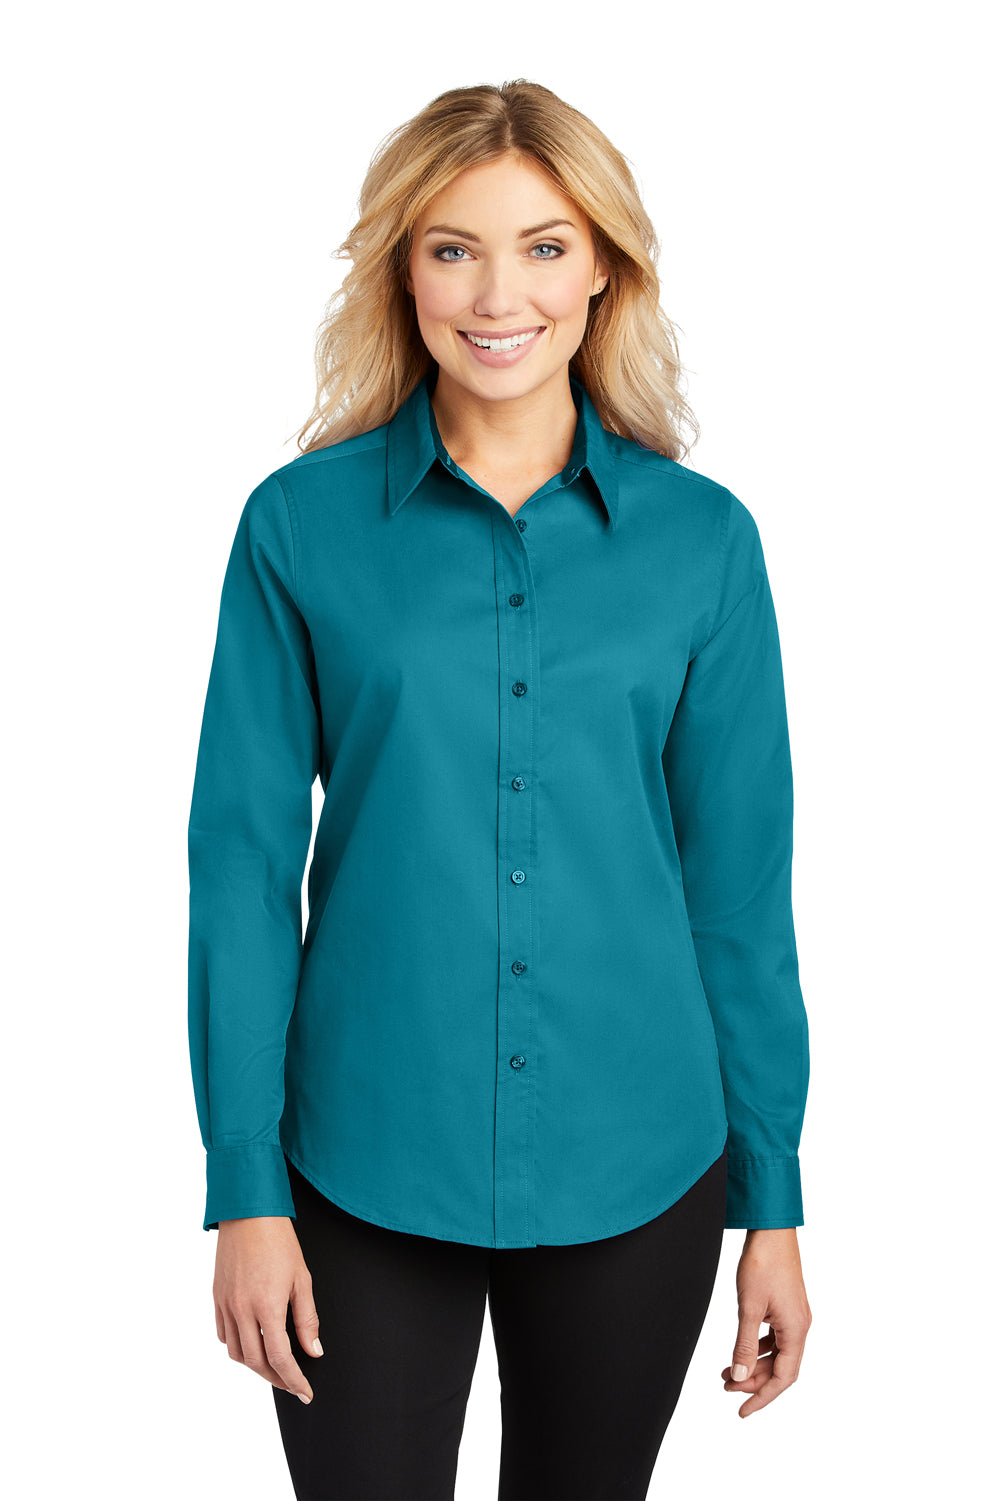 Magellan shirt men 3XL Relaxed Fit Stain Resistant Blue Button